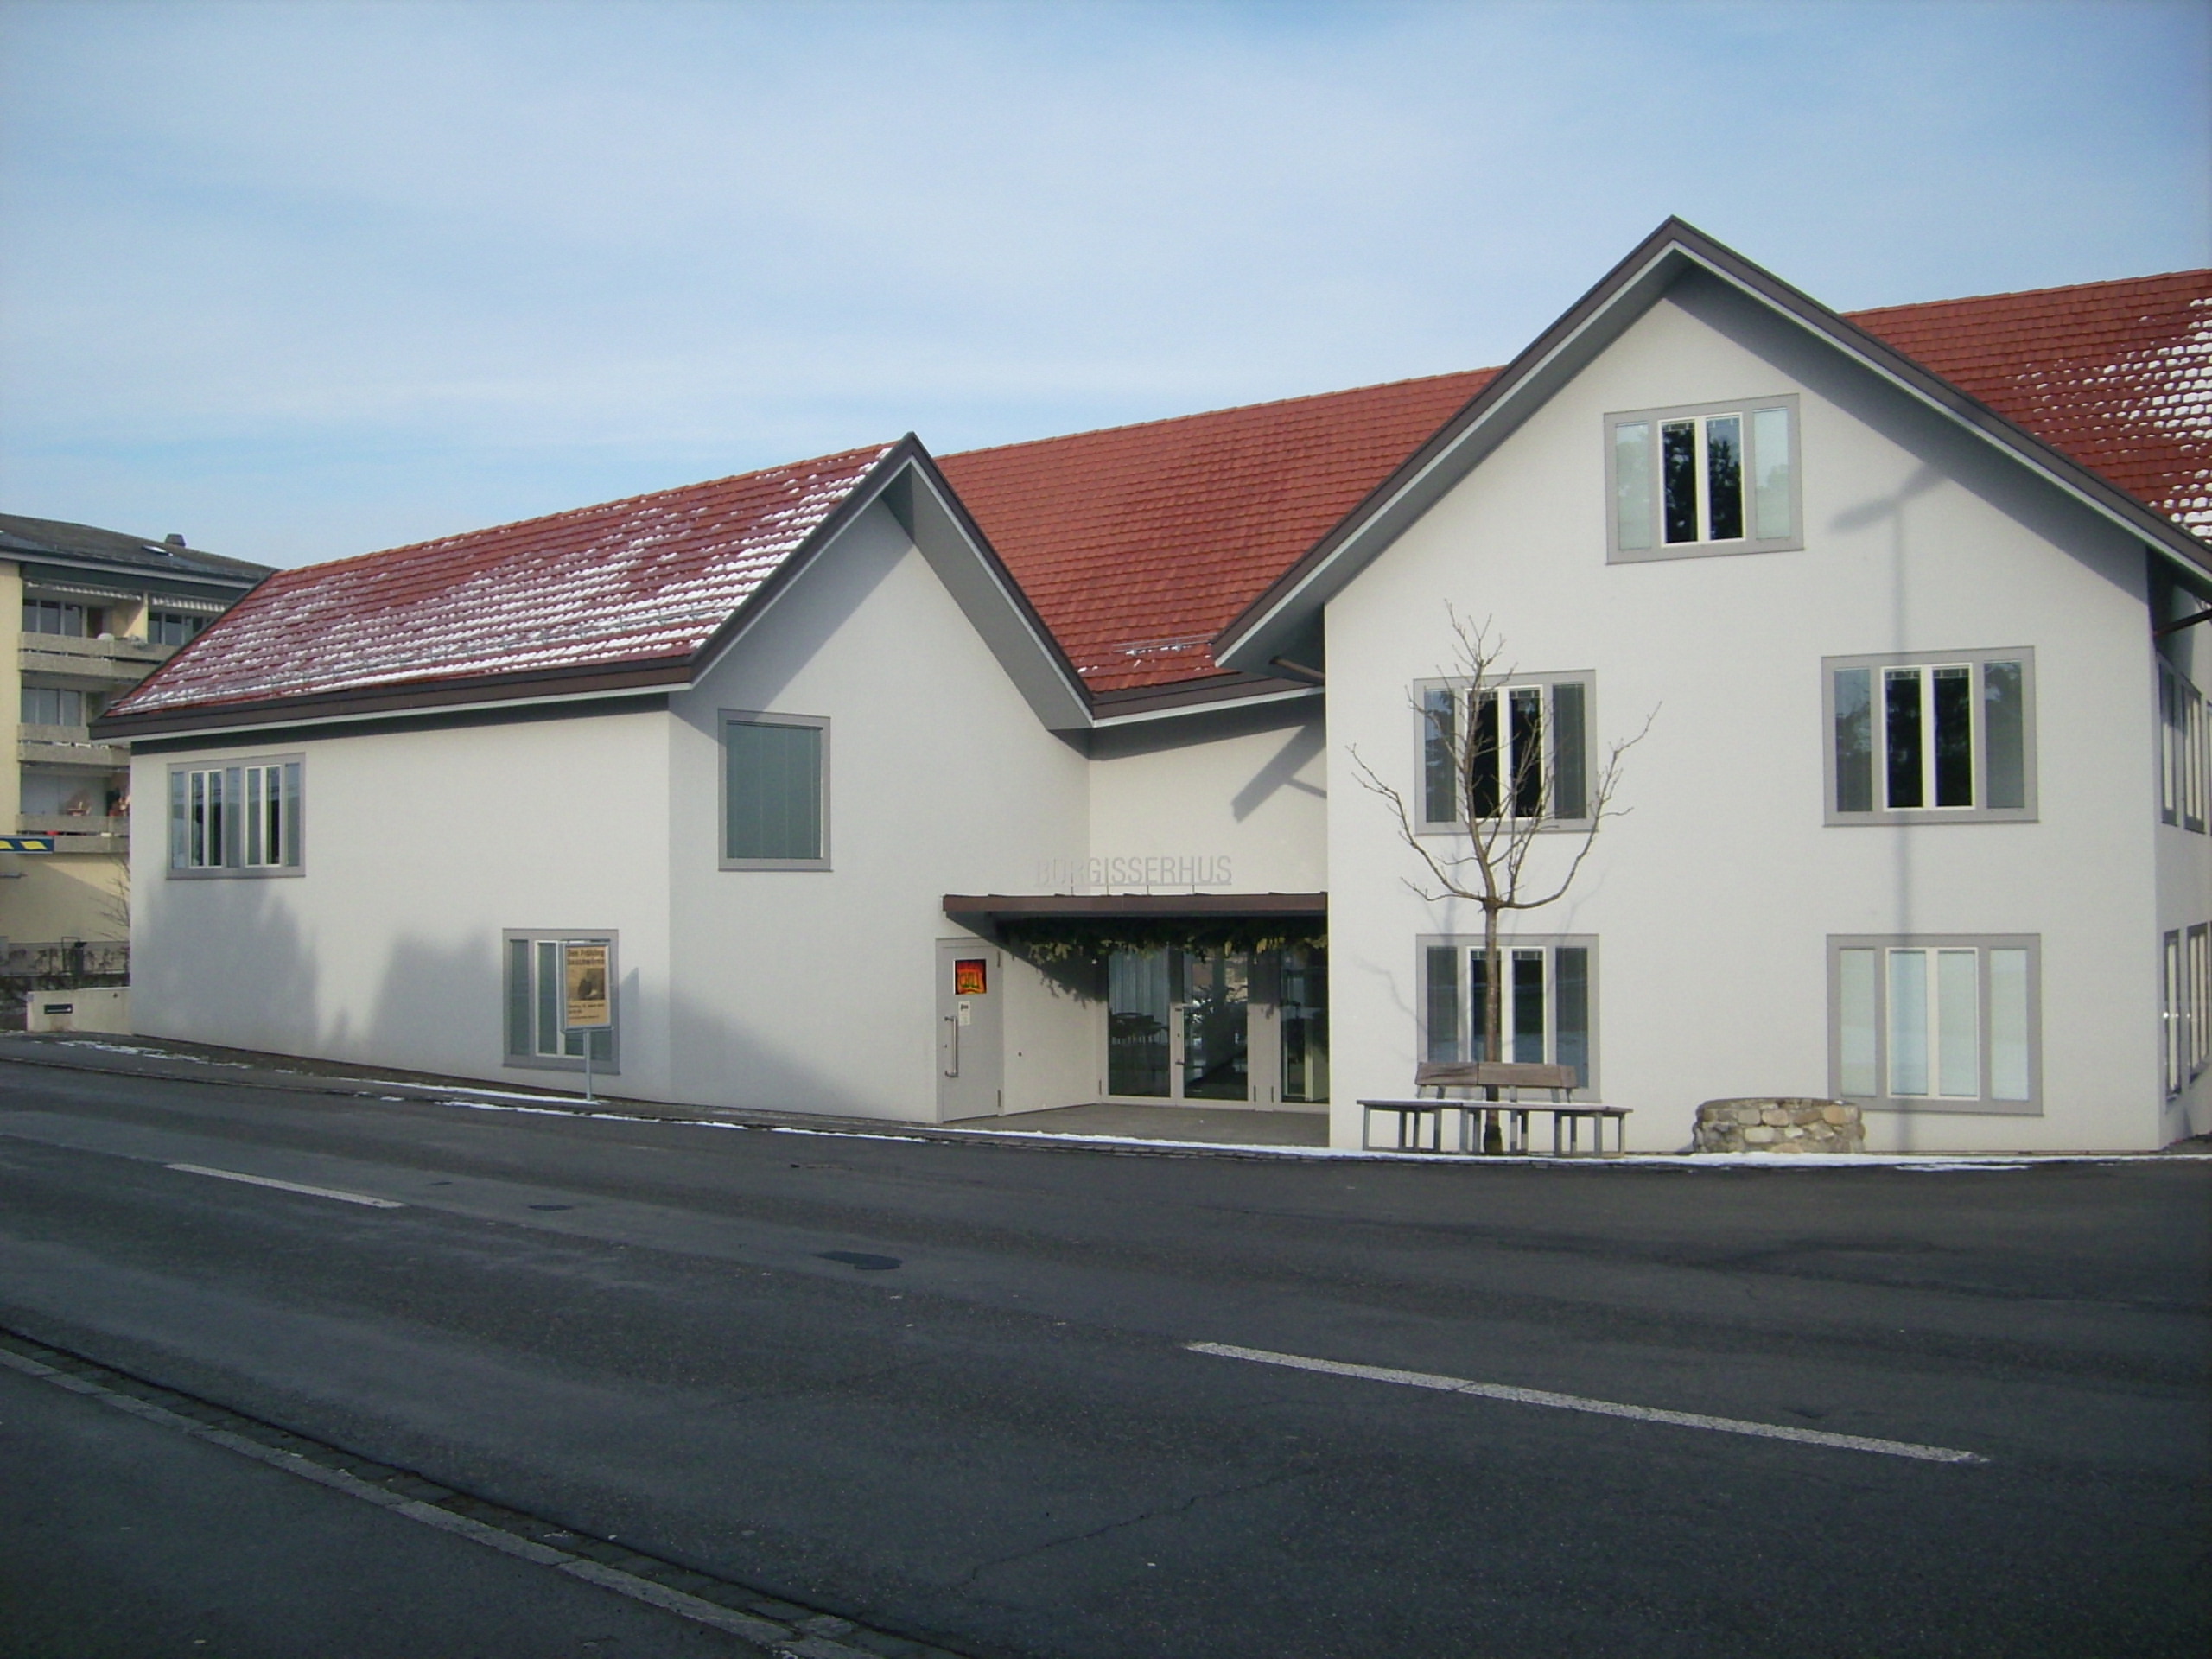 Kulturzentrum Bürgisserhus